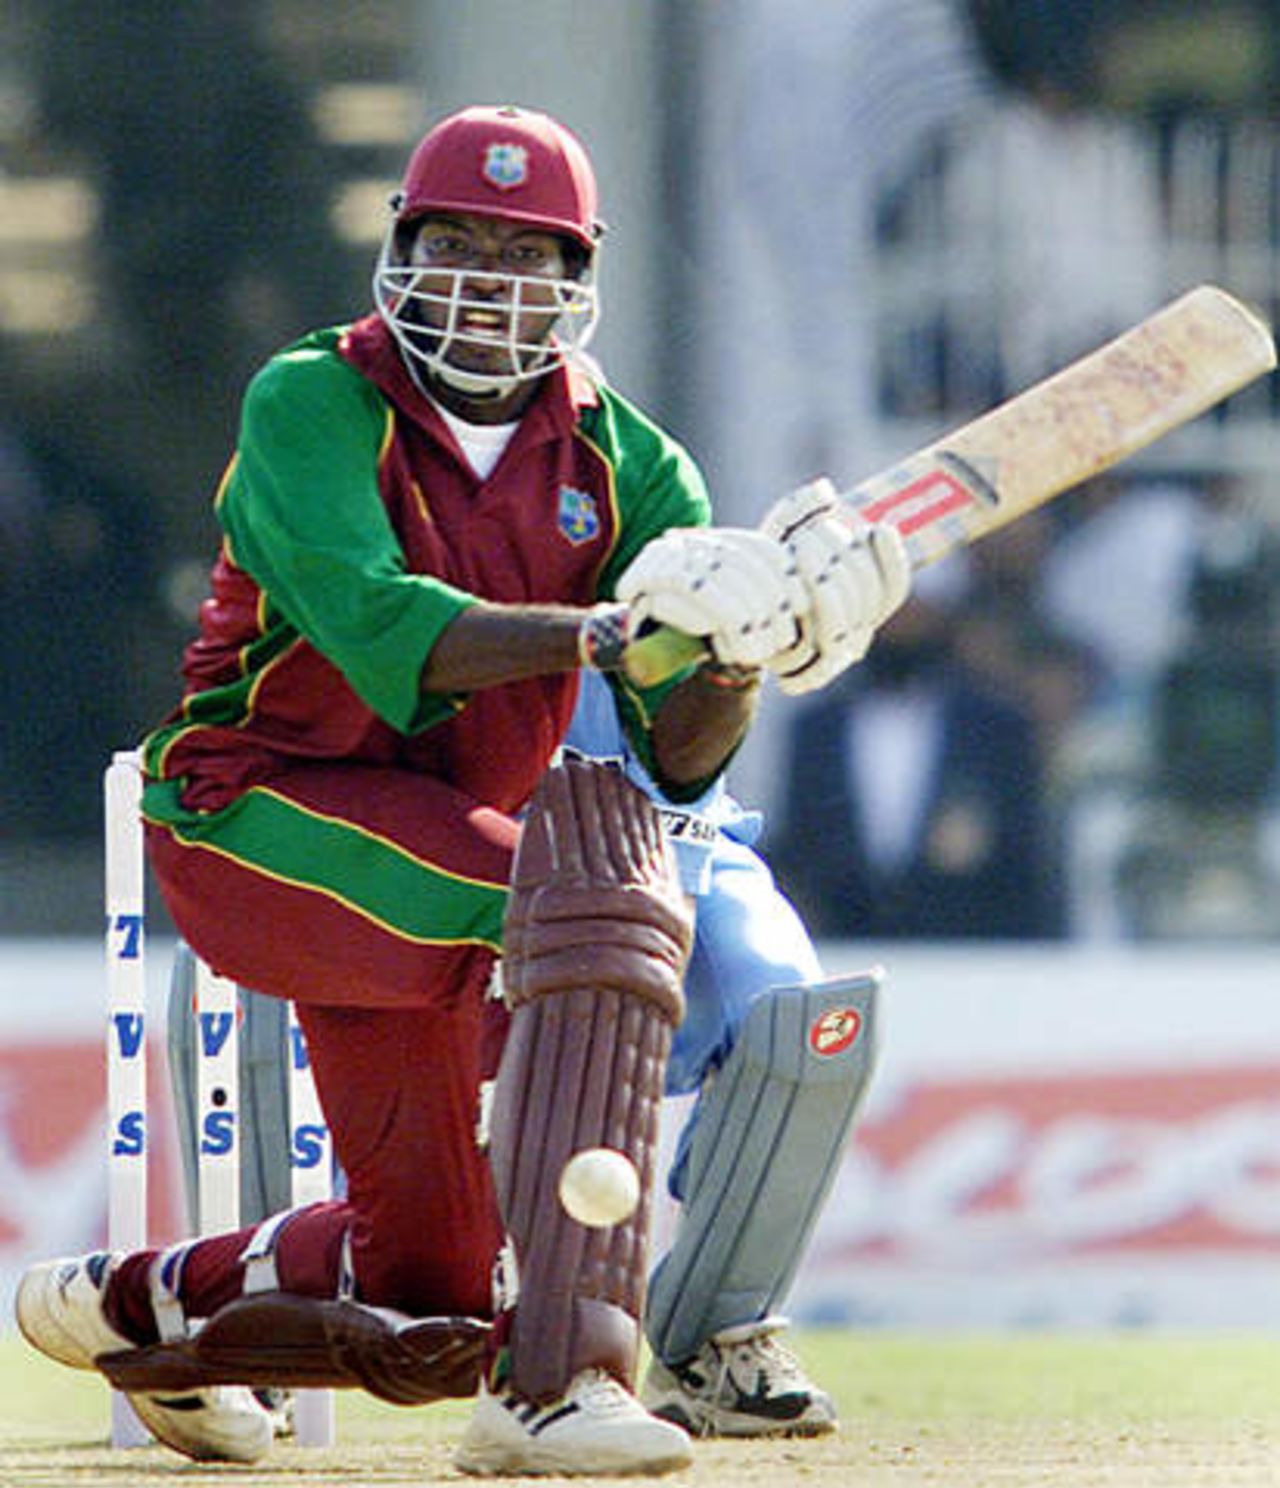 2nd ODI: India v West Indies at Nagpur, 9 Nov 2002